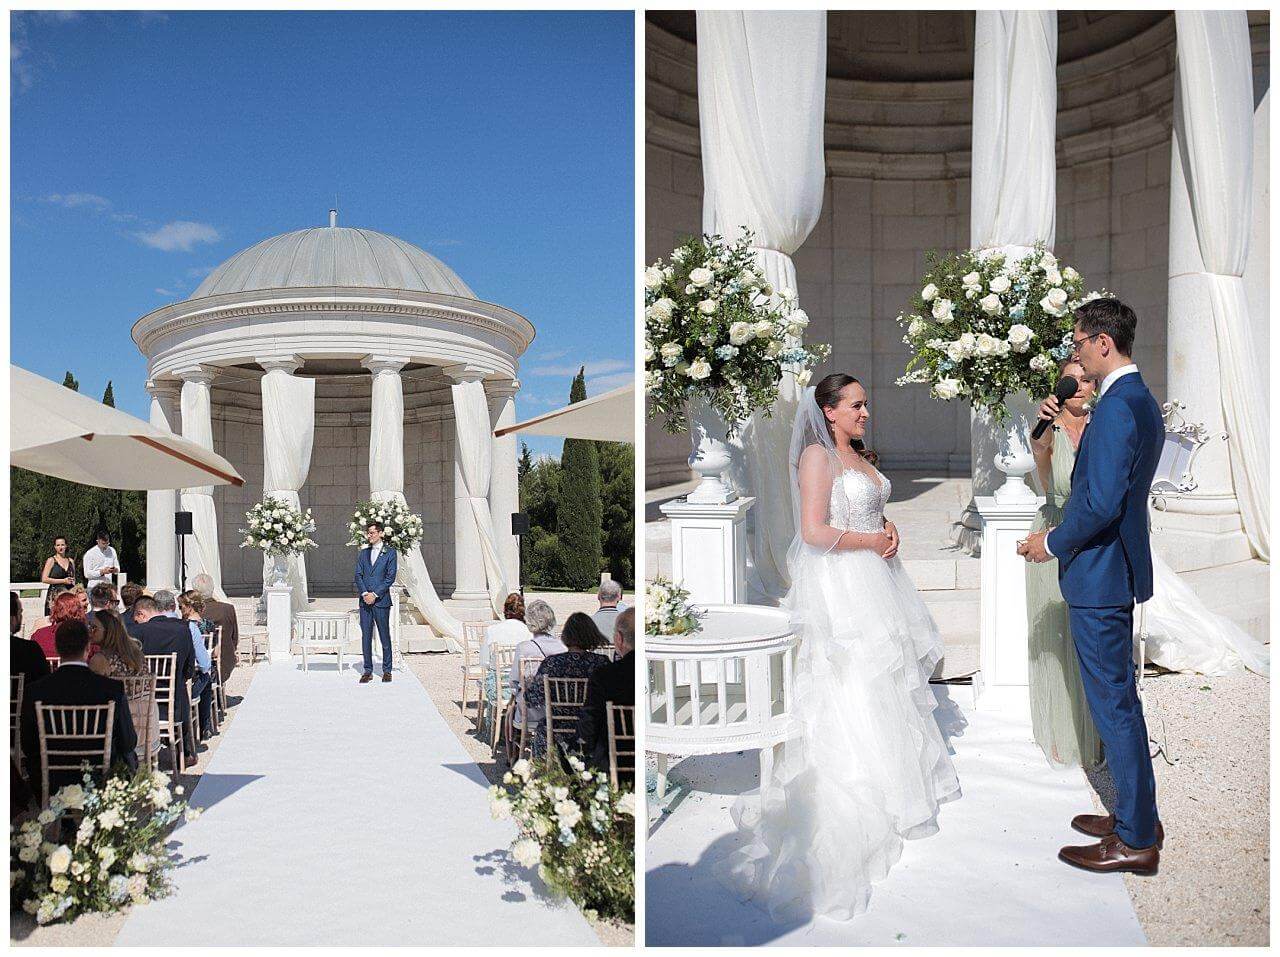 Brautpaar bei freier Trauung in weiß in Istrien Kroatien